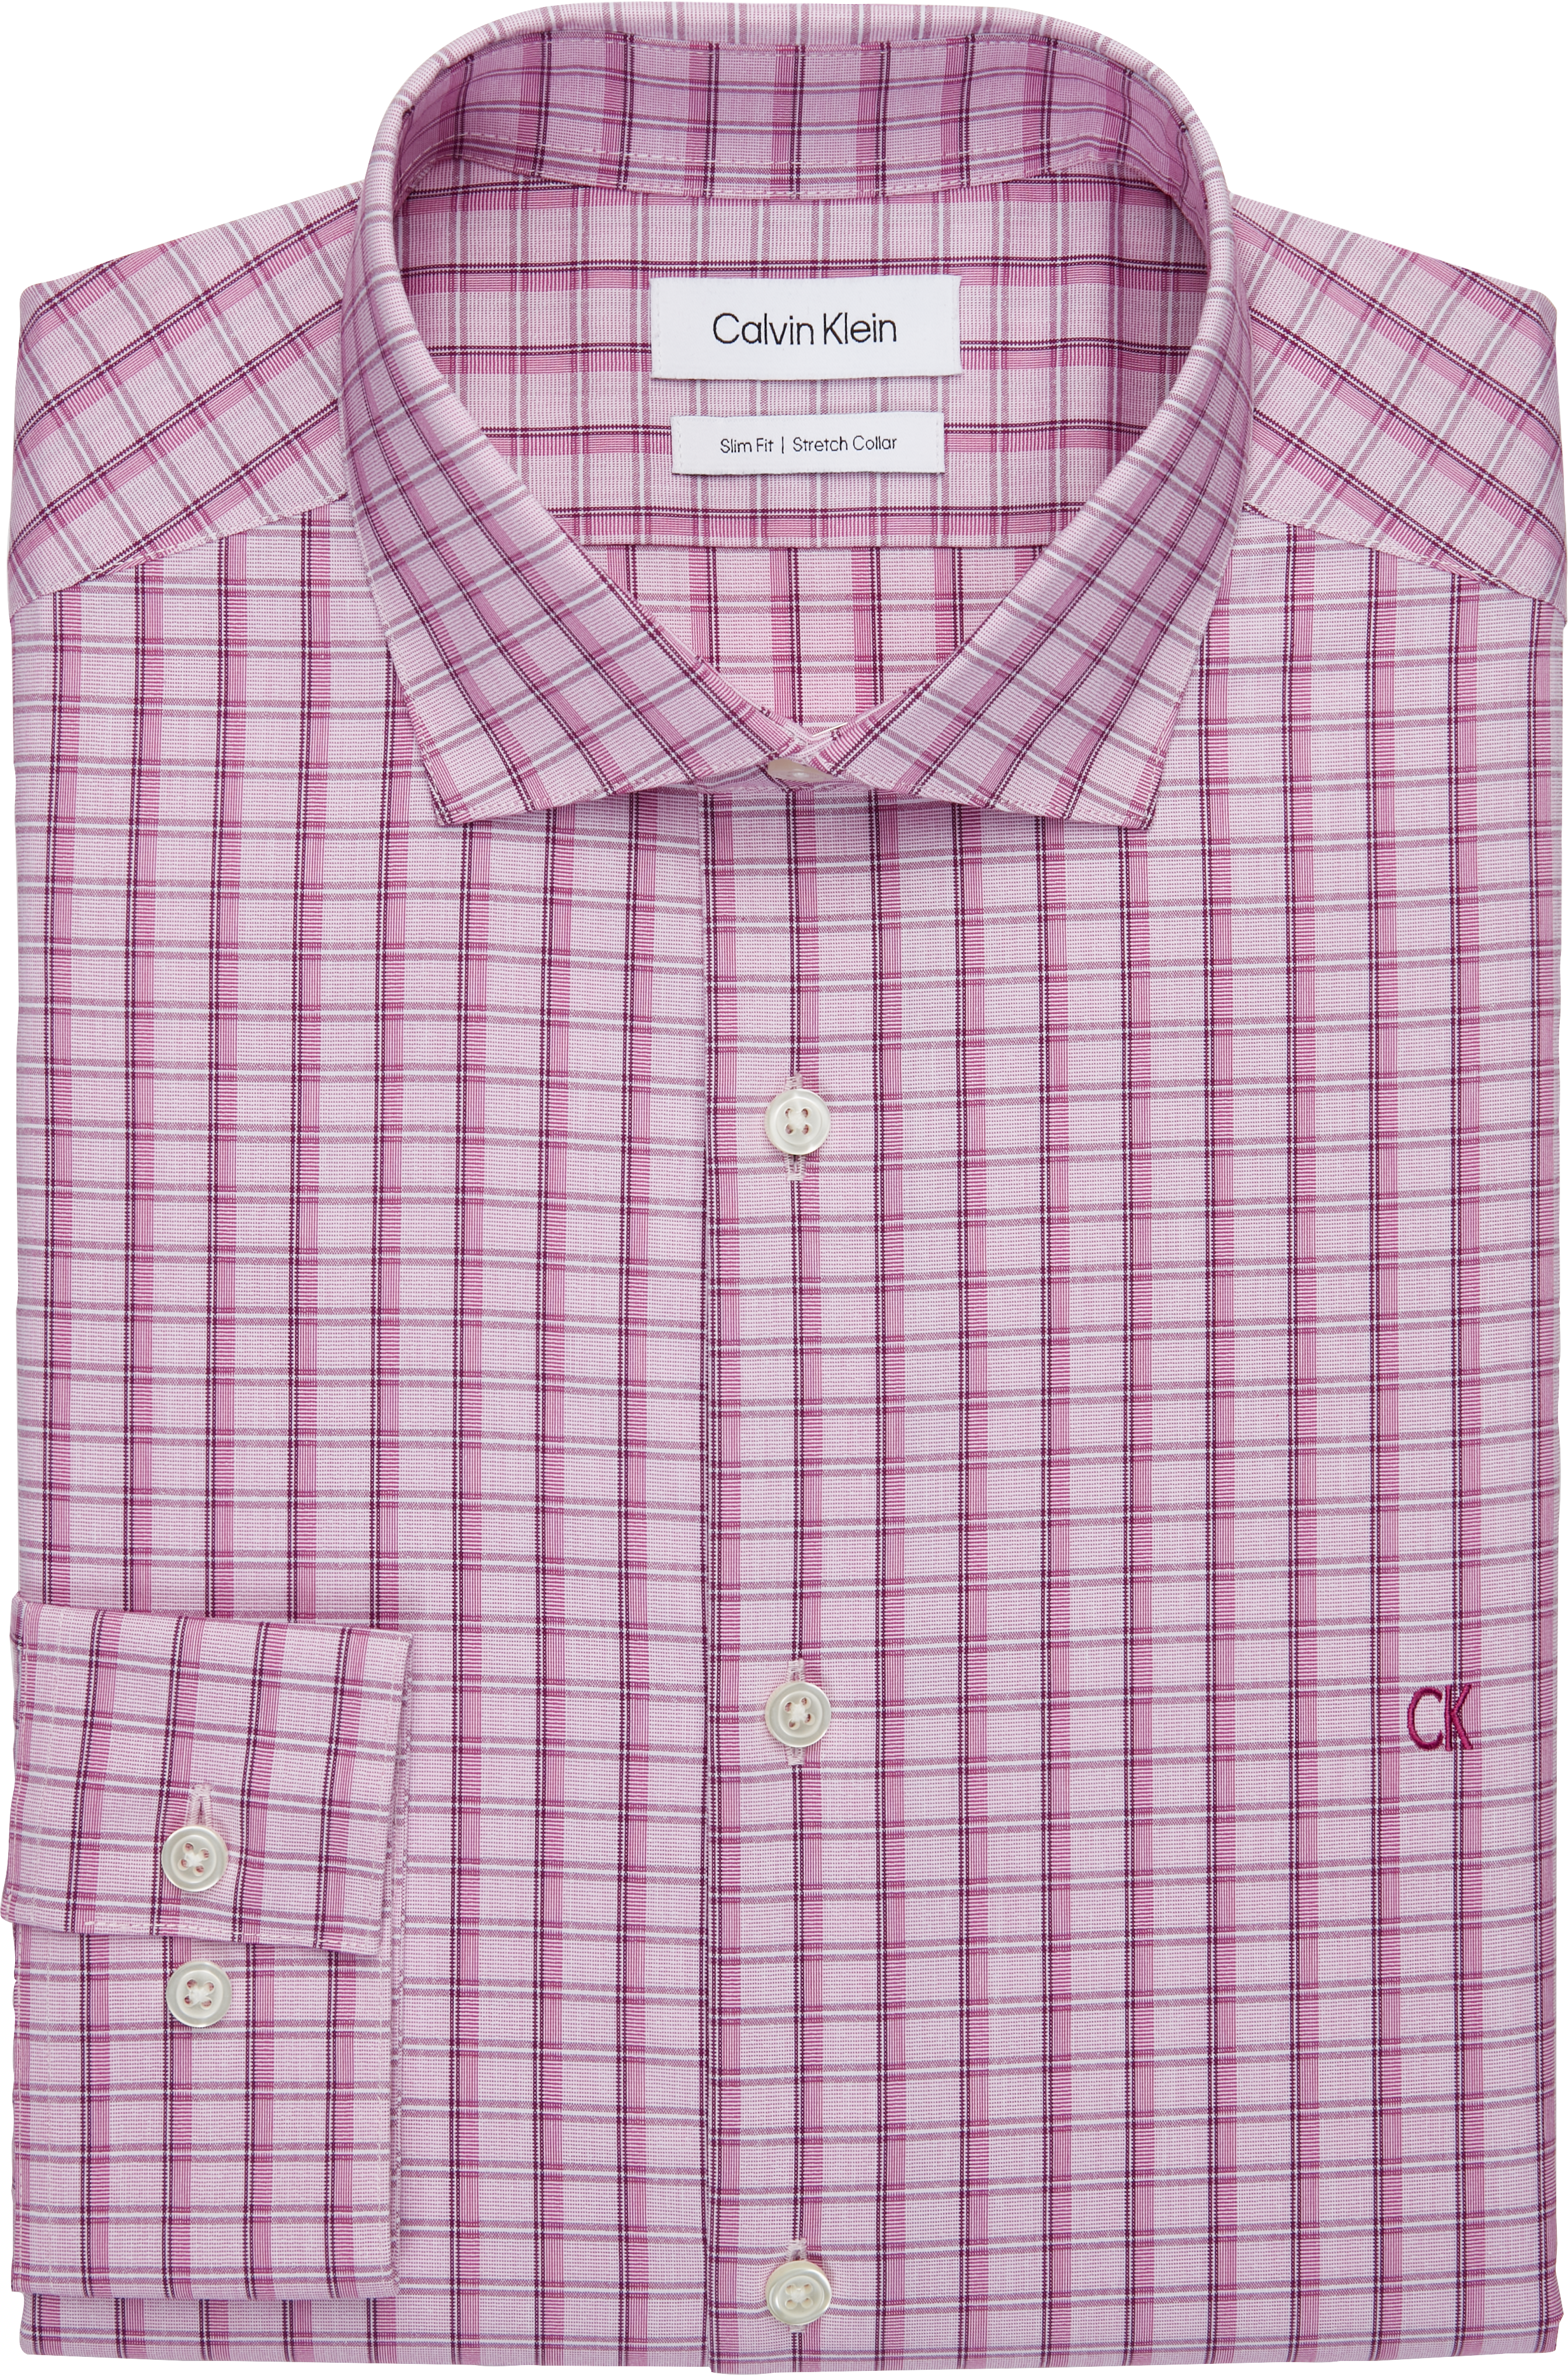 Calvin Klein Slim Fit Point Collar Dress Shirt, Purple Lights Plaid - Men's  Featured | Men's Wearhouse